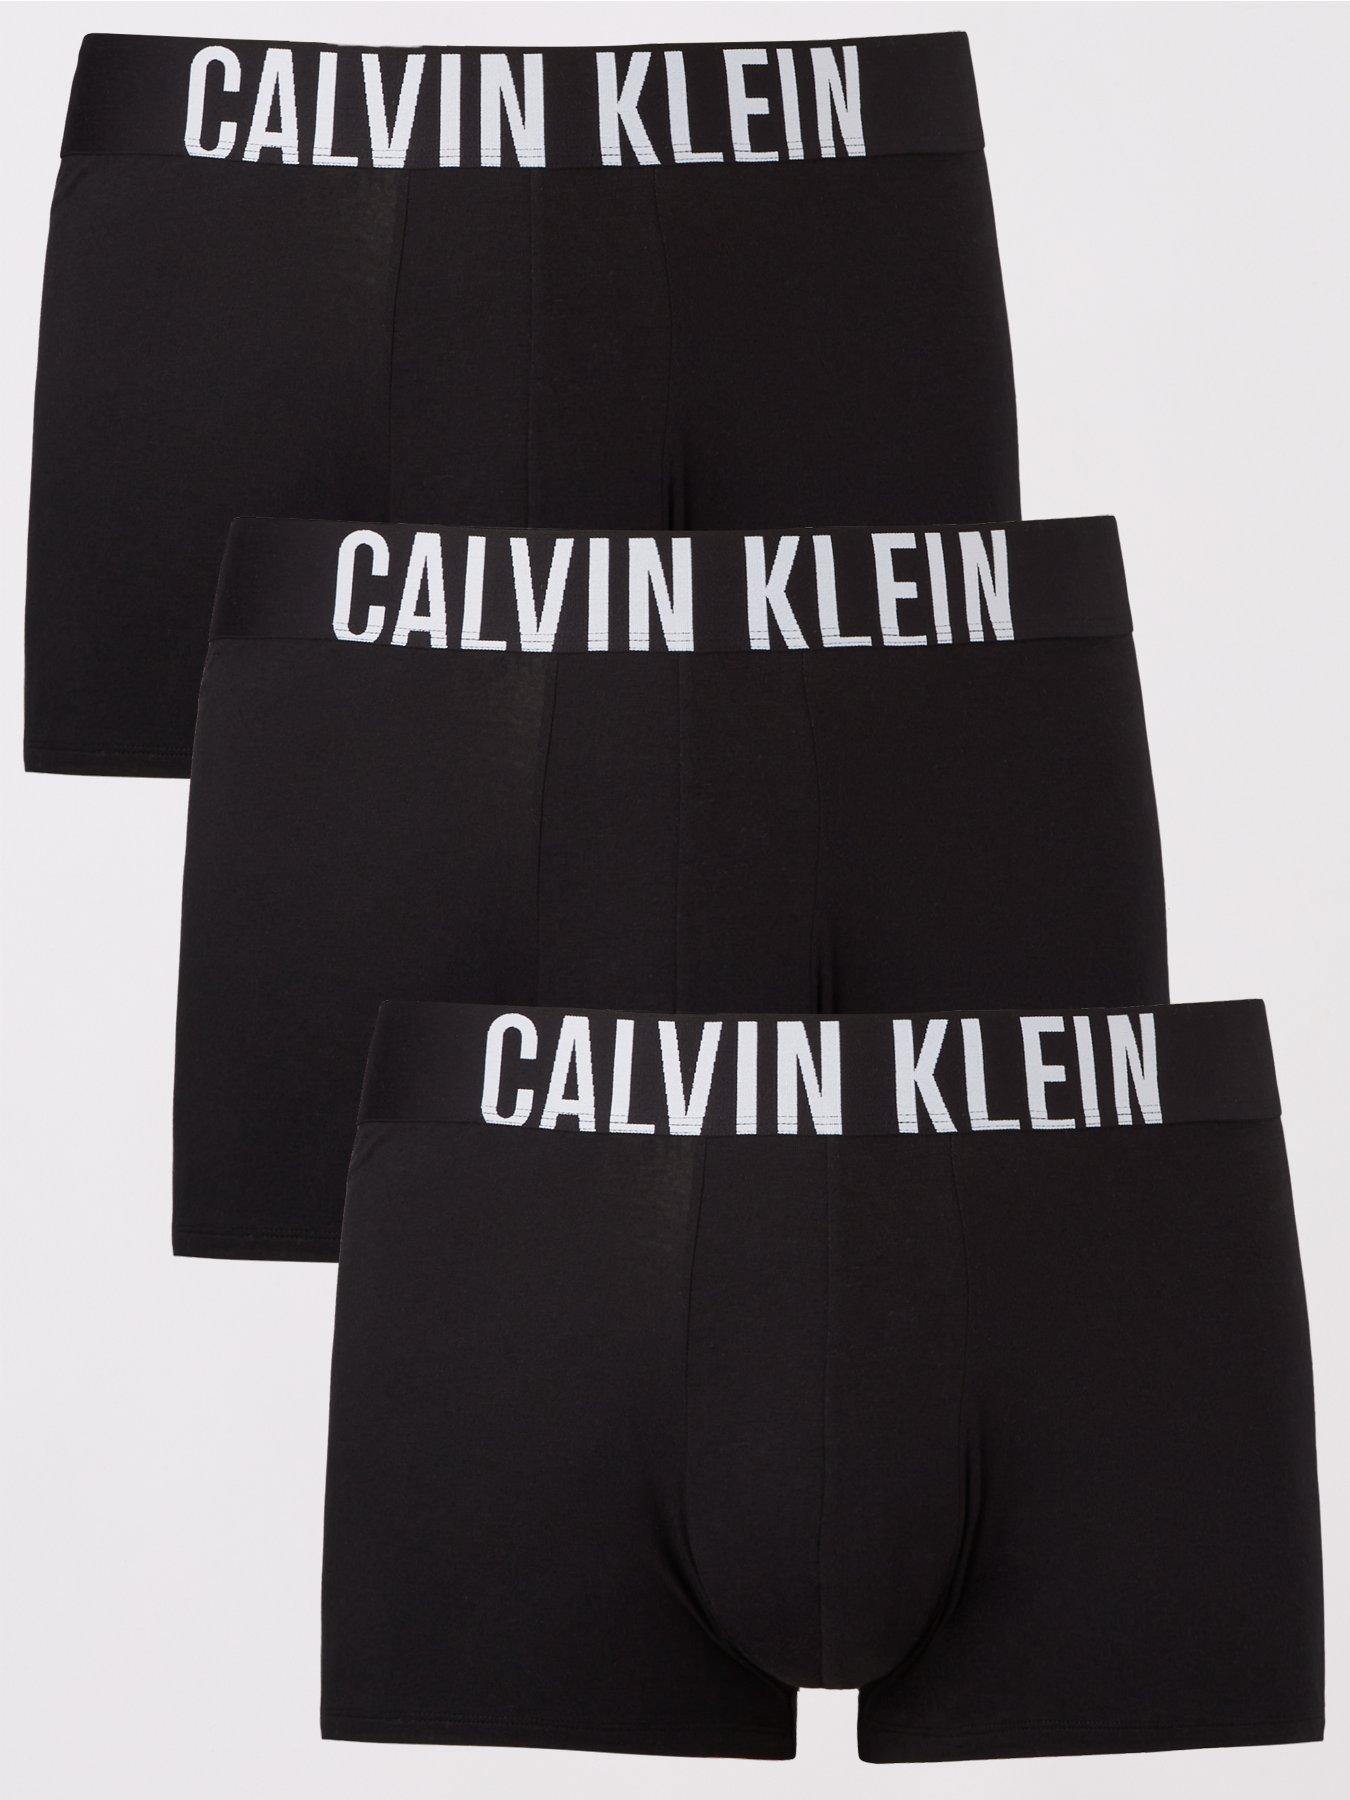 Calvin Klein Underwear & Socks